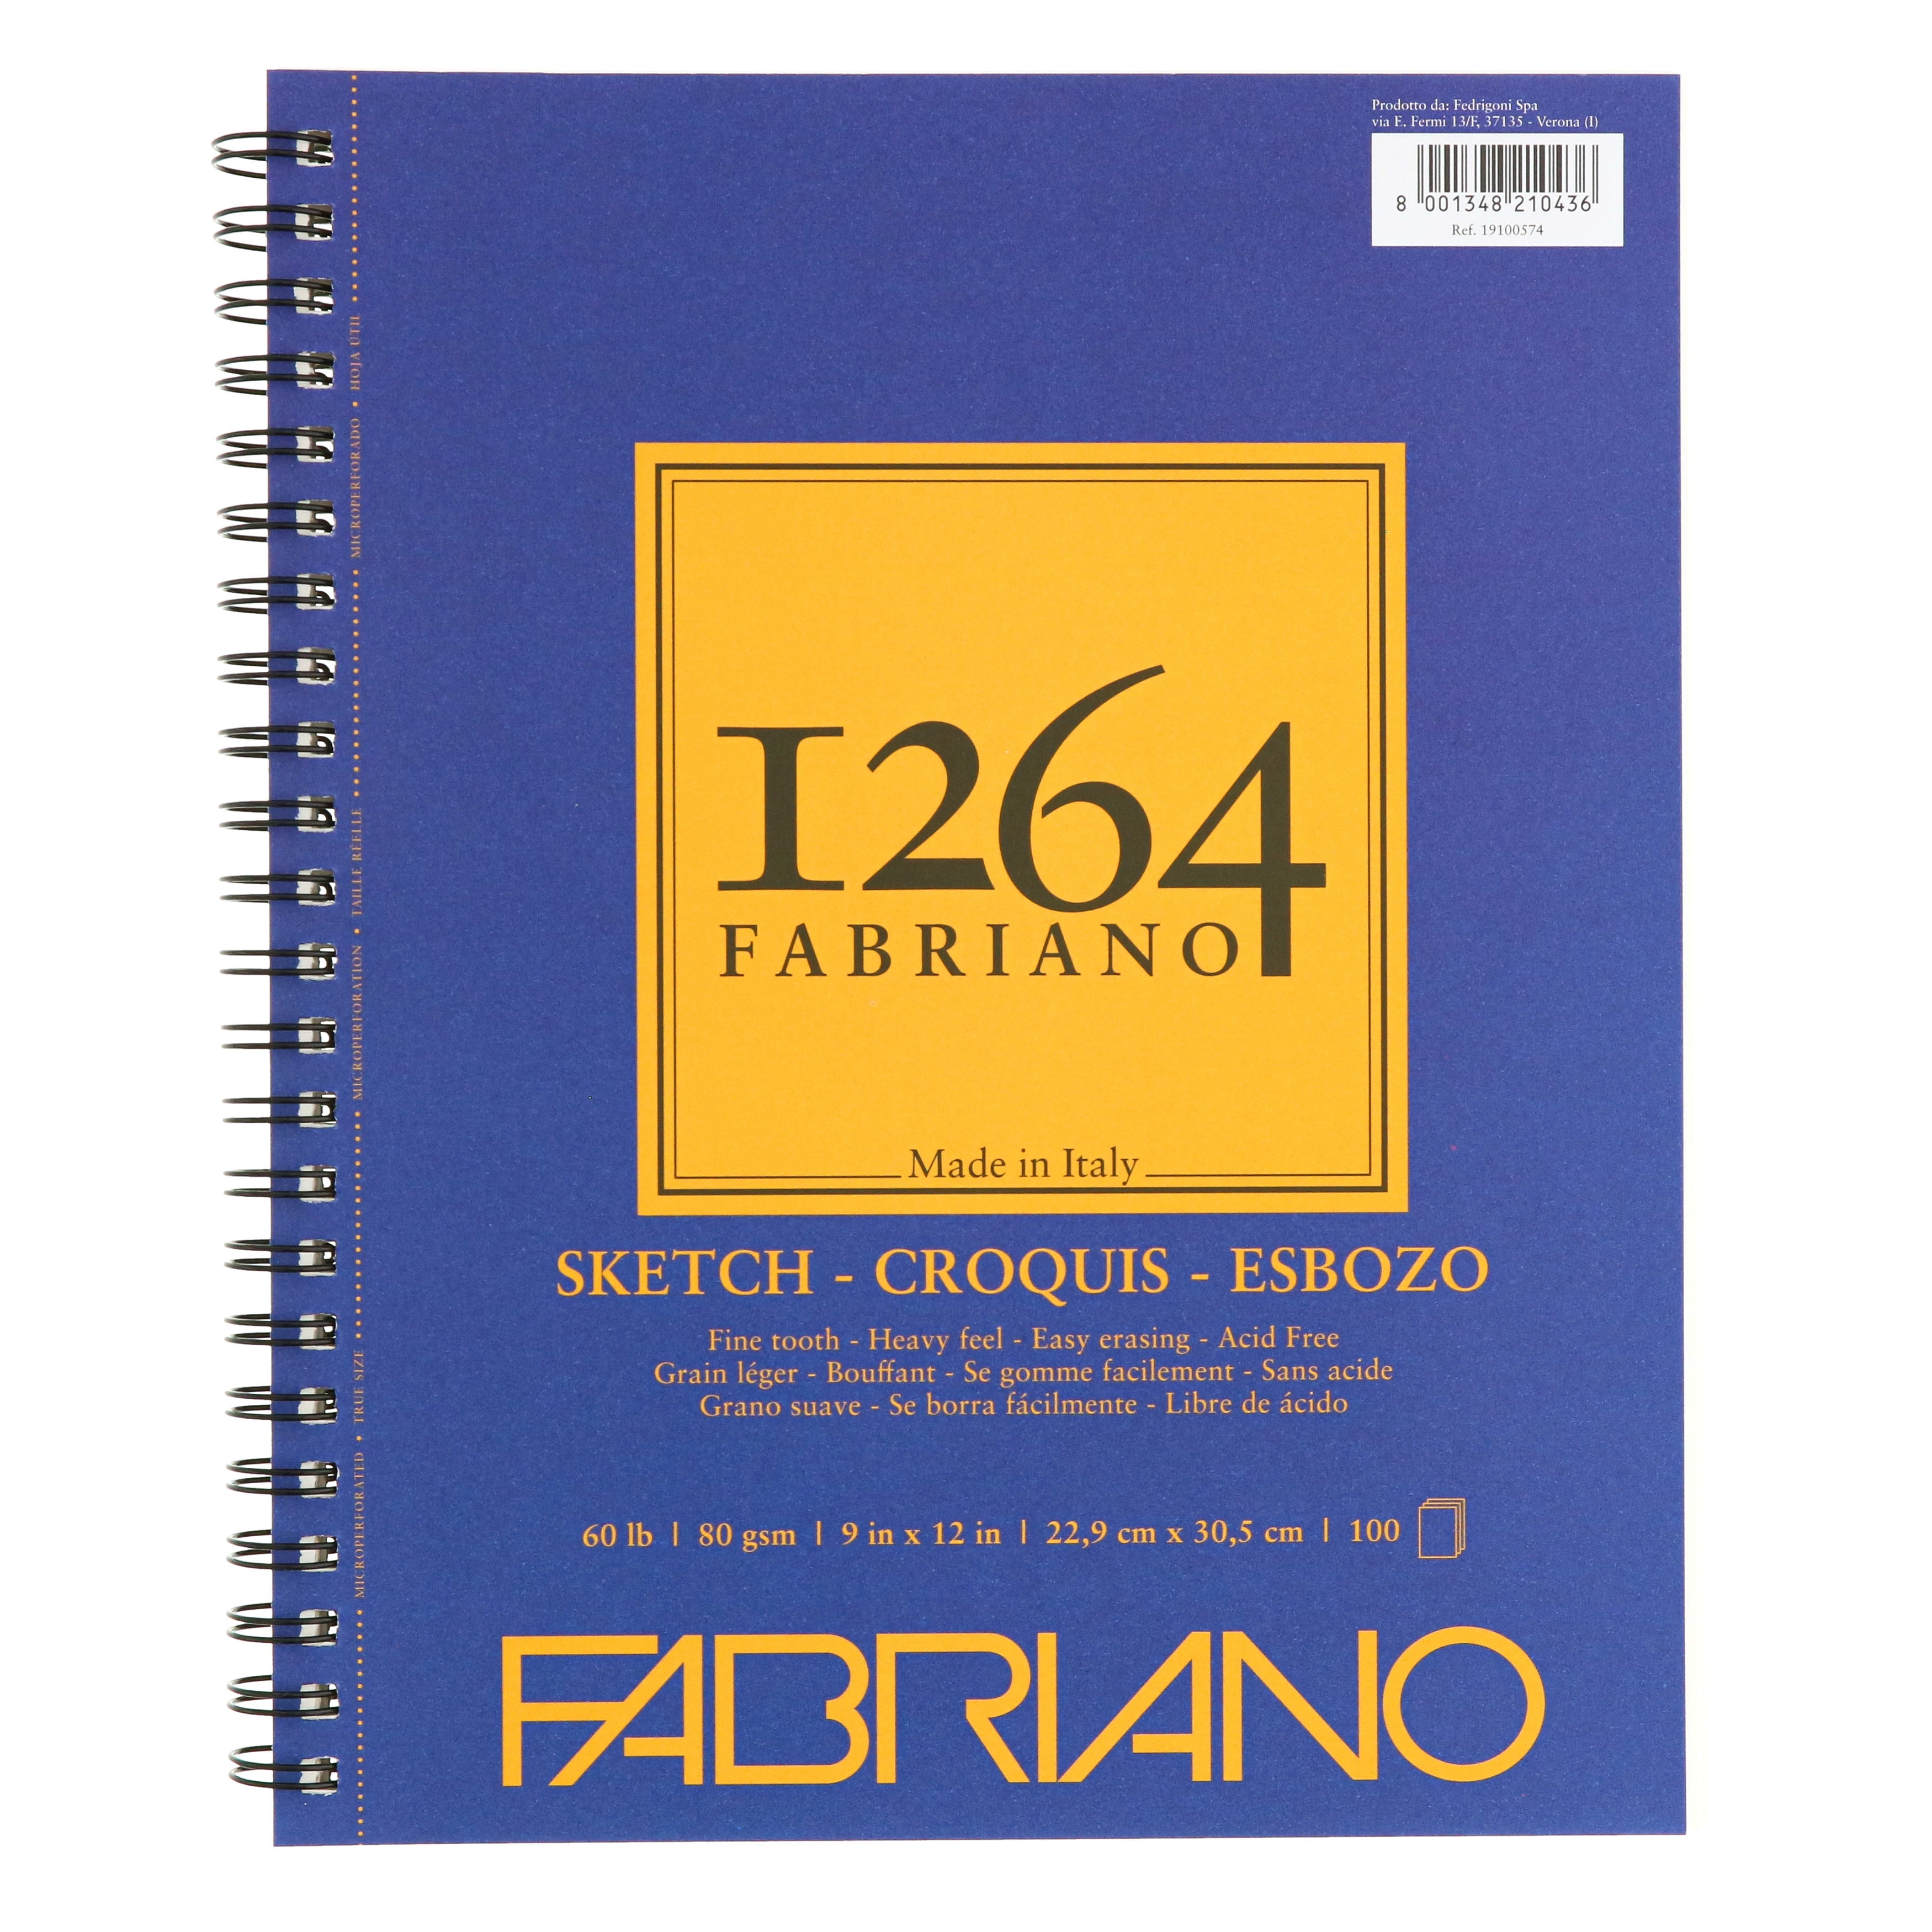 Fabriano 1264 Sketch Pad, 11 inch x 14 inch, Spiral Bound